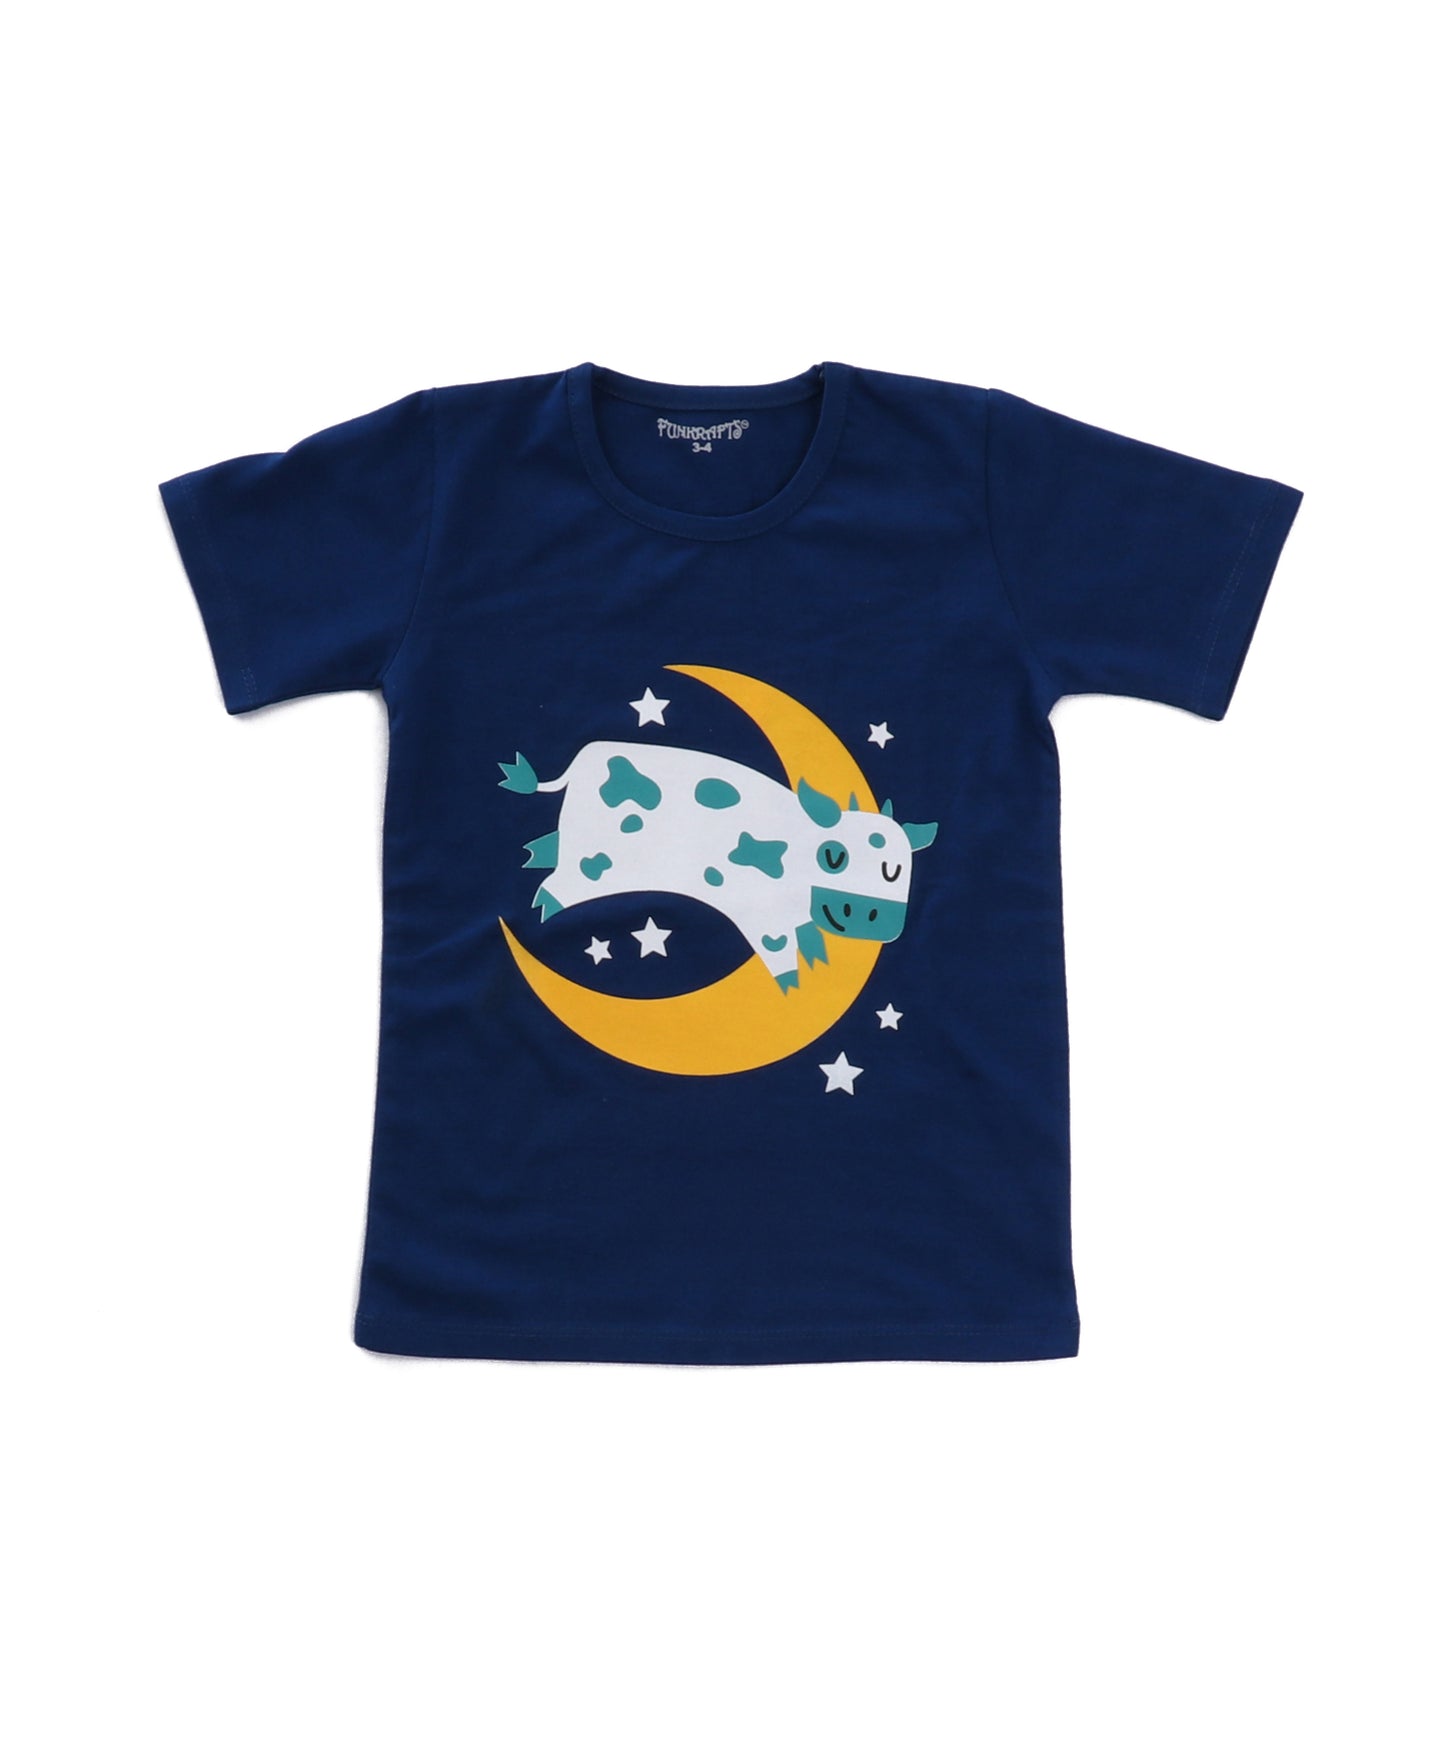 Blue Cow Printed Kids T-shirt